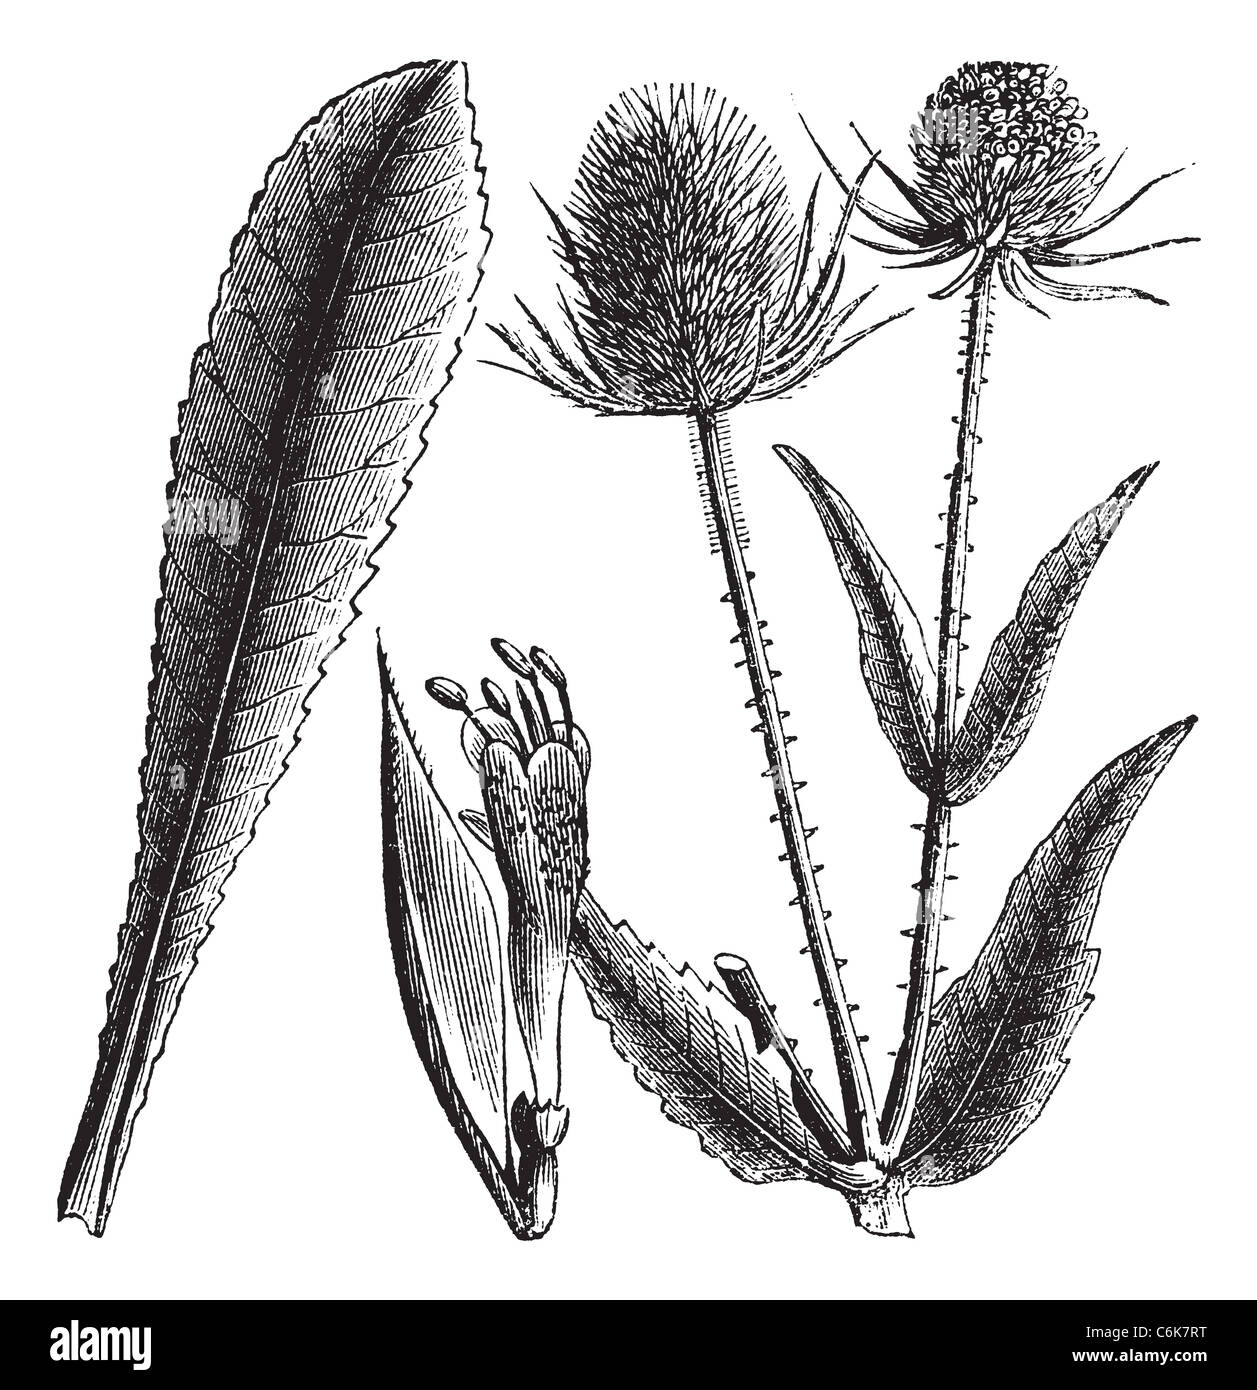 Dipsacus sylvestris or Teasel or Dipsacus fullonum vintage engraving. Old engraved illustrationg of wild teasel. Stock Photo